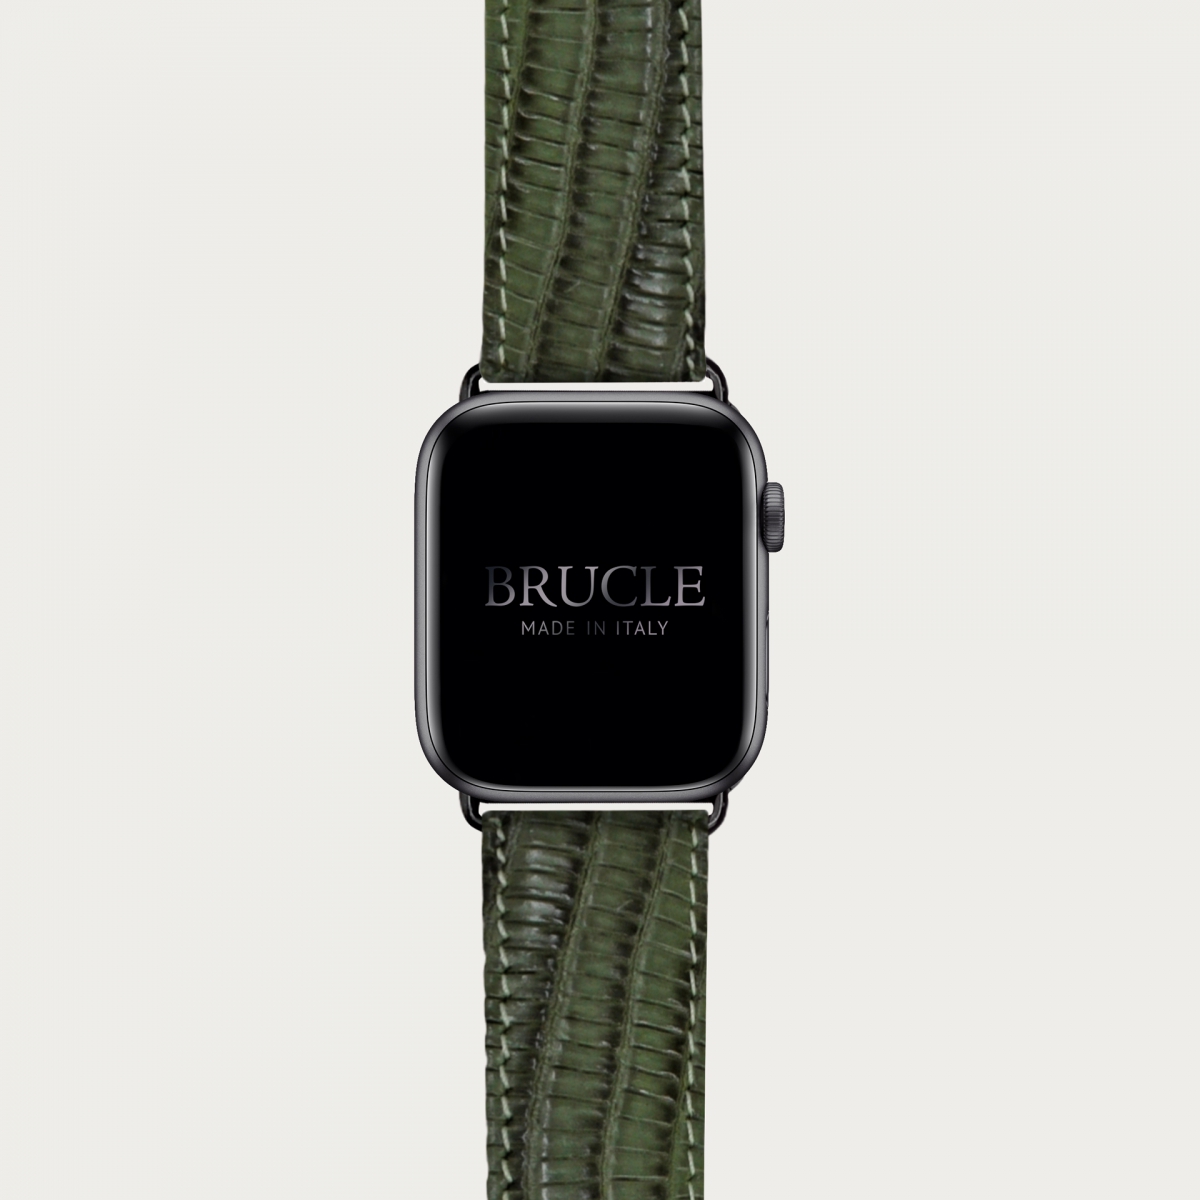 Brucle Armband kompatibel mit Apple Watch / Samsung Smartwatch, dunkelbraun